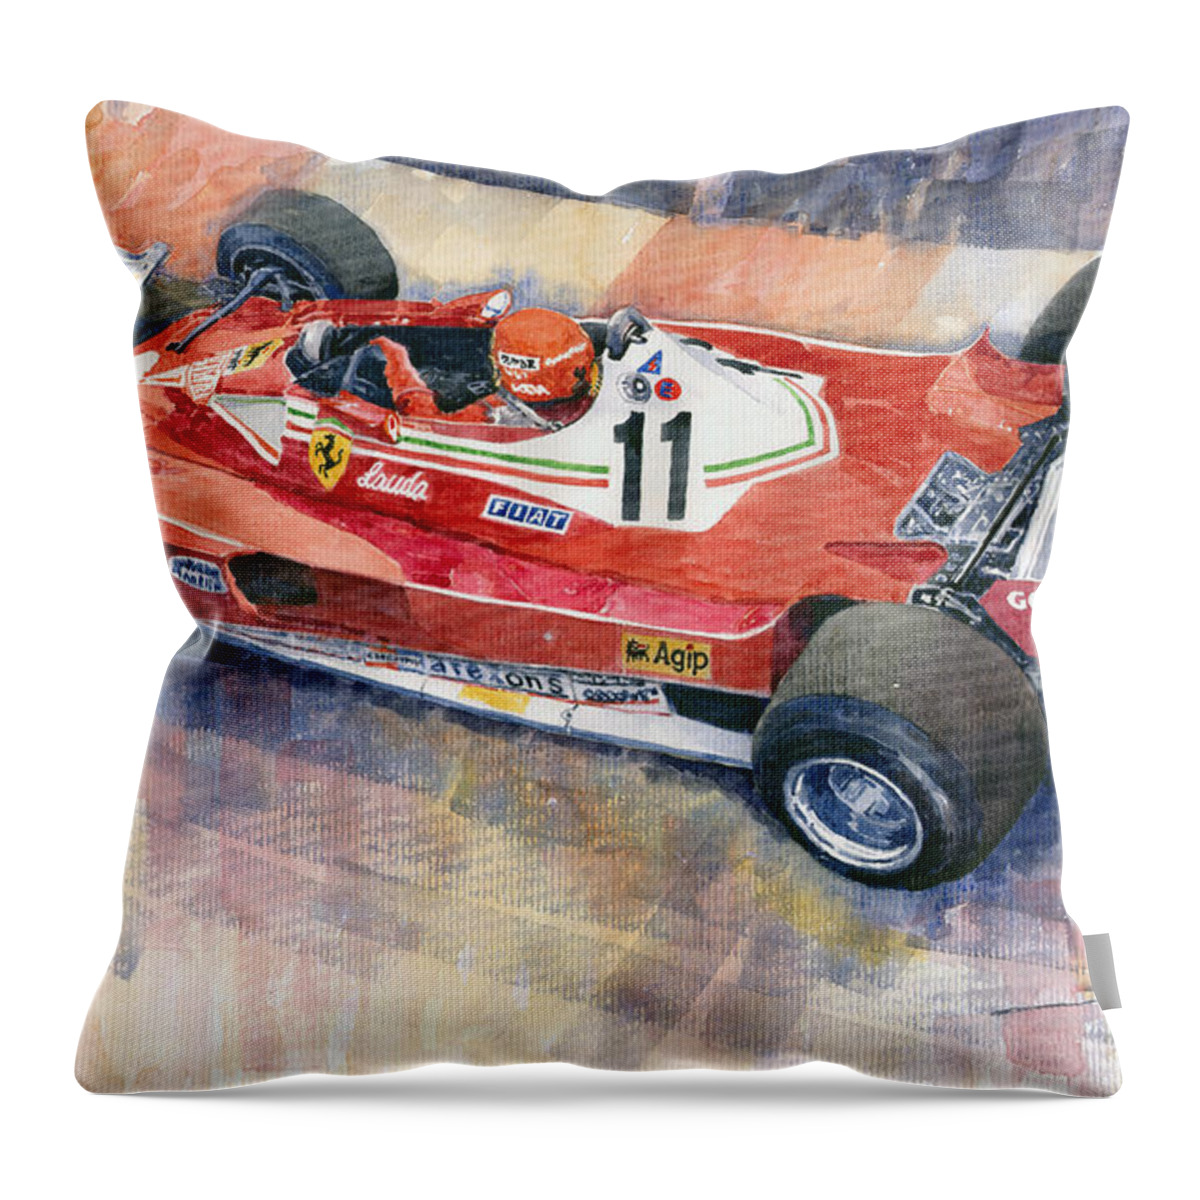 Watercolor Throw Pillow featuring the painting 1977 Monaco GP Ferrari 312 T2 Niki Lauda by Yuriy Shevchuk